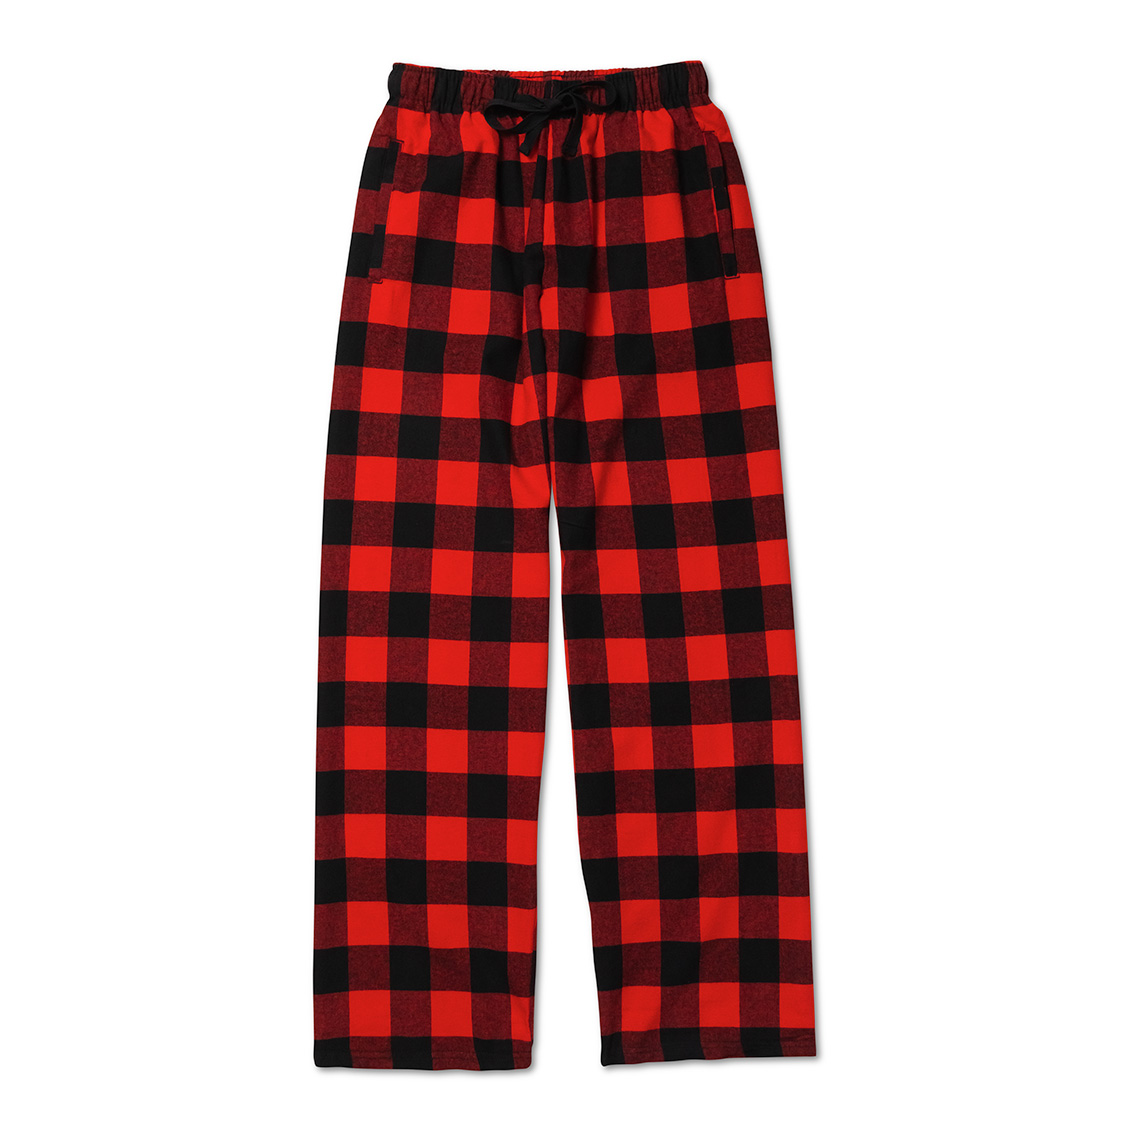 Adult Pajama Pants, Black/Red, L | Pajama Pants | Clothing | Gifts ...